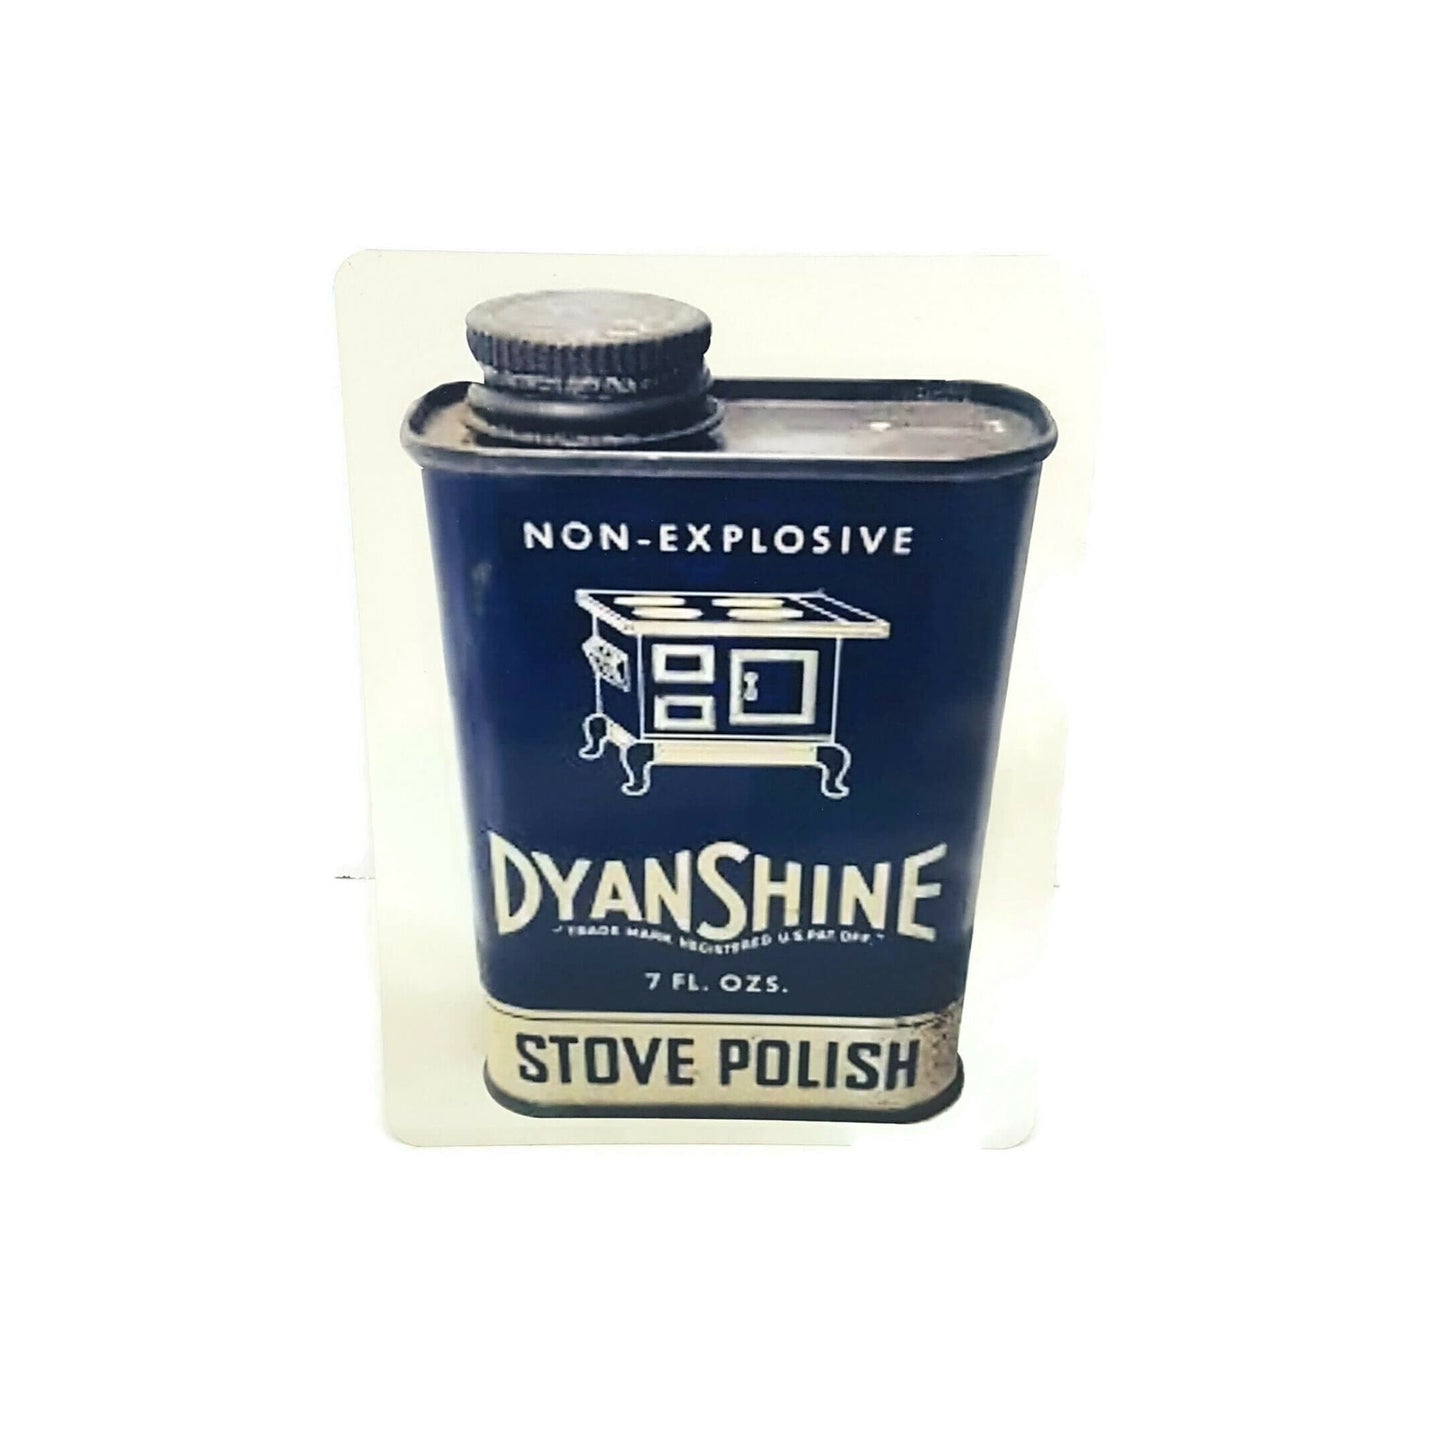 non explosive dyanshine stove polish metal advertising sign